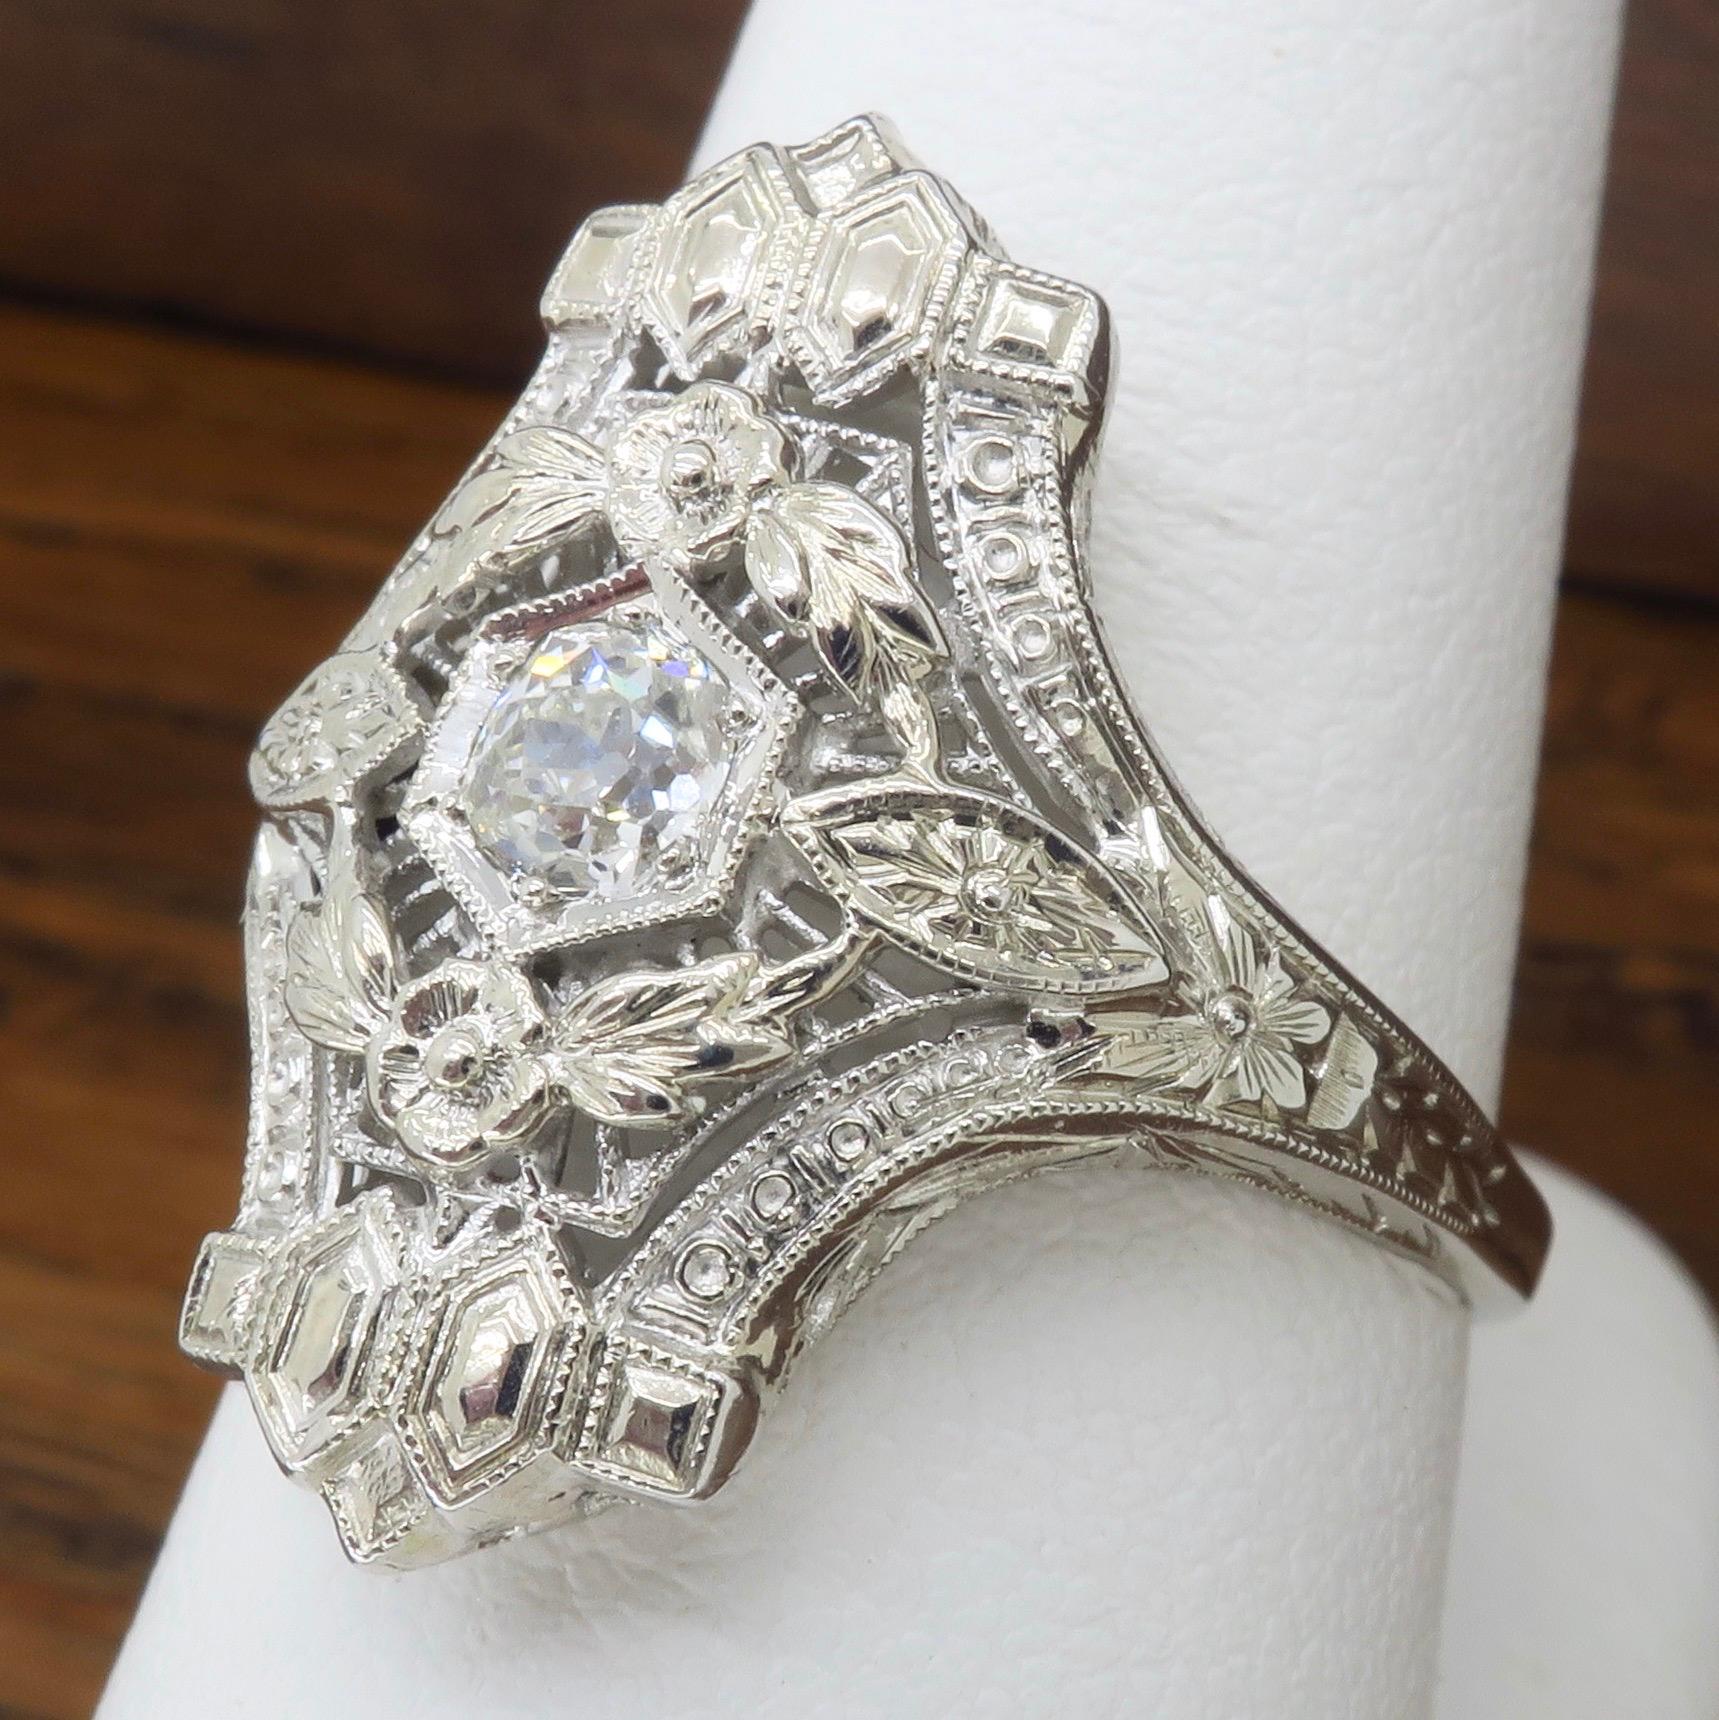 Art Deco 18K white gold diamond shield ring

Diamond Carat Weight: Approximately .36CTW
Diamond Cut: Old European Cut 
Metal: 18K White Gold
Weight: 3.9 Grams
Ring Size: 7.5-8